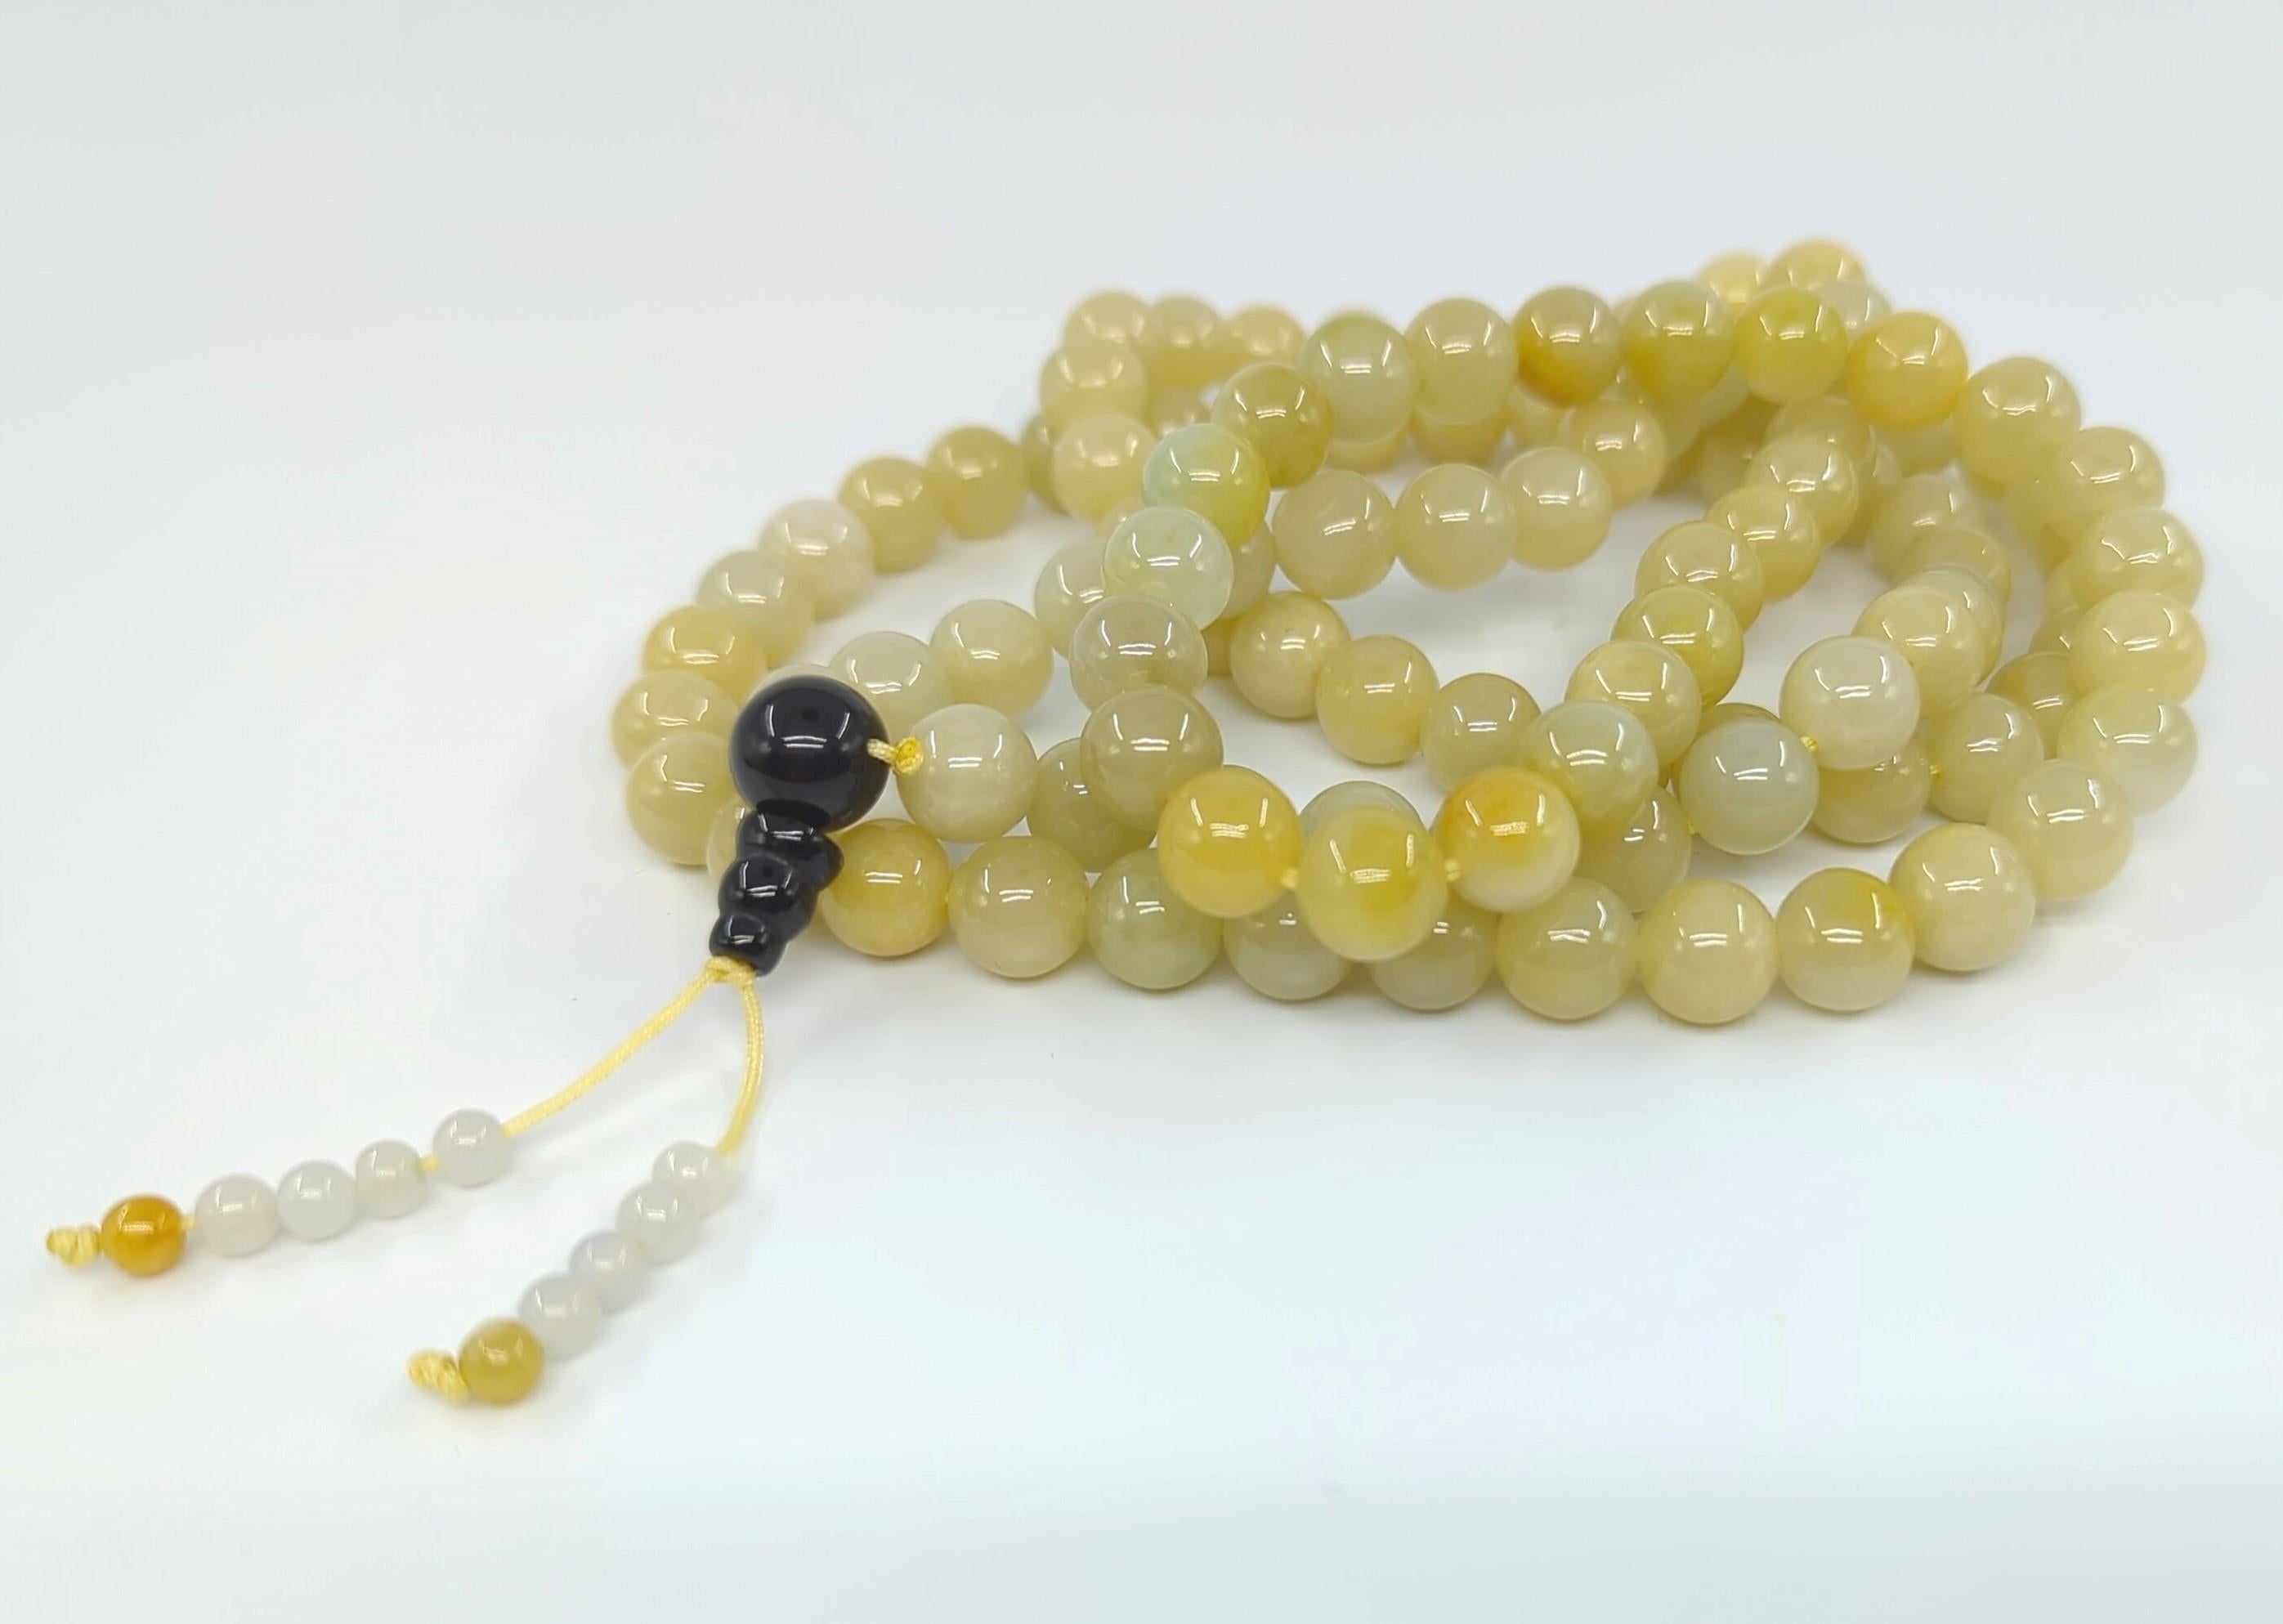 Exquisite Chinese Yellow Jadeite Buddhist Meditation Beads 108pc A-Grade 40